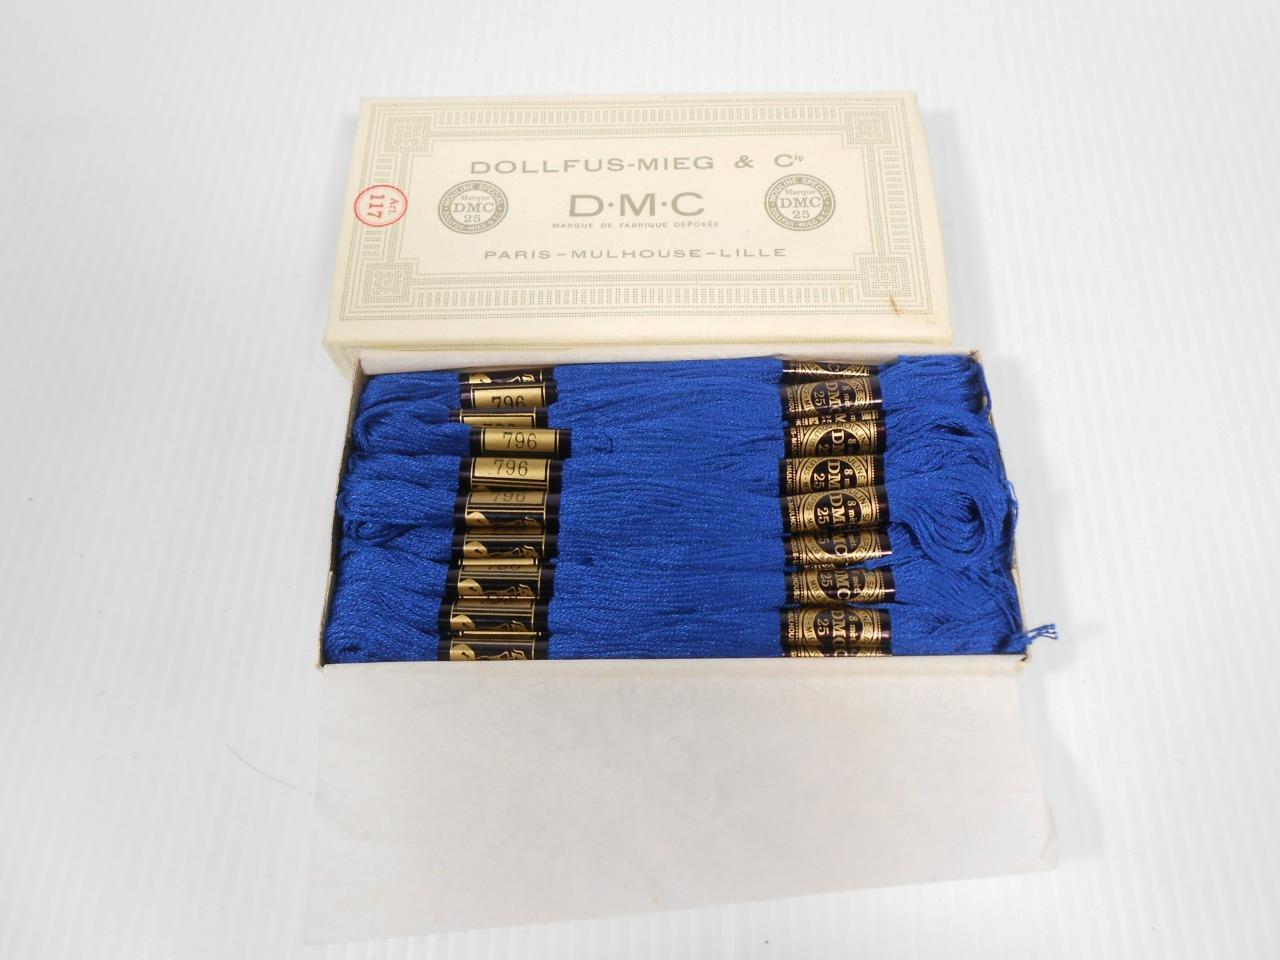 Vintage DMC Dollfus-Mieg Paris 25 Embroidery Thread Dark Blue 796. NEW Open Box